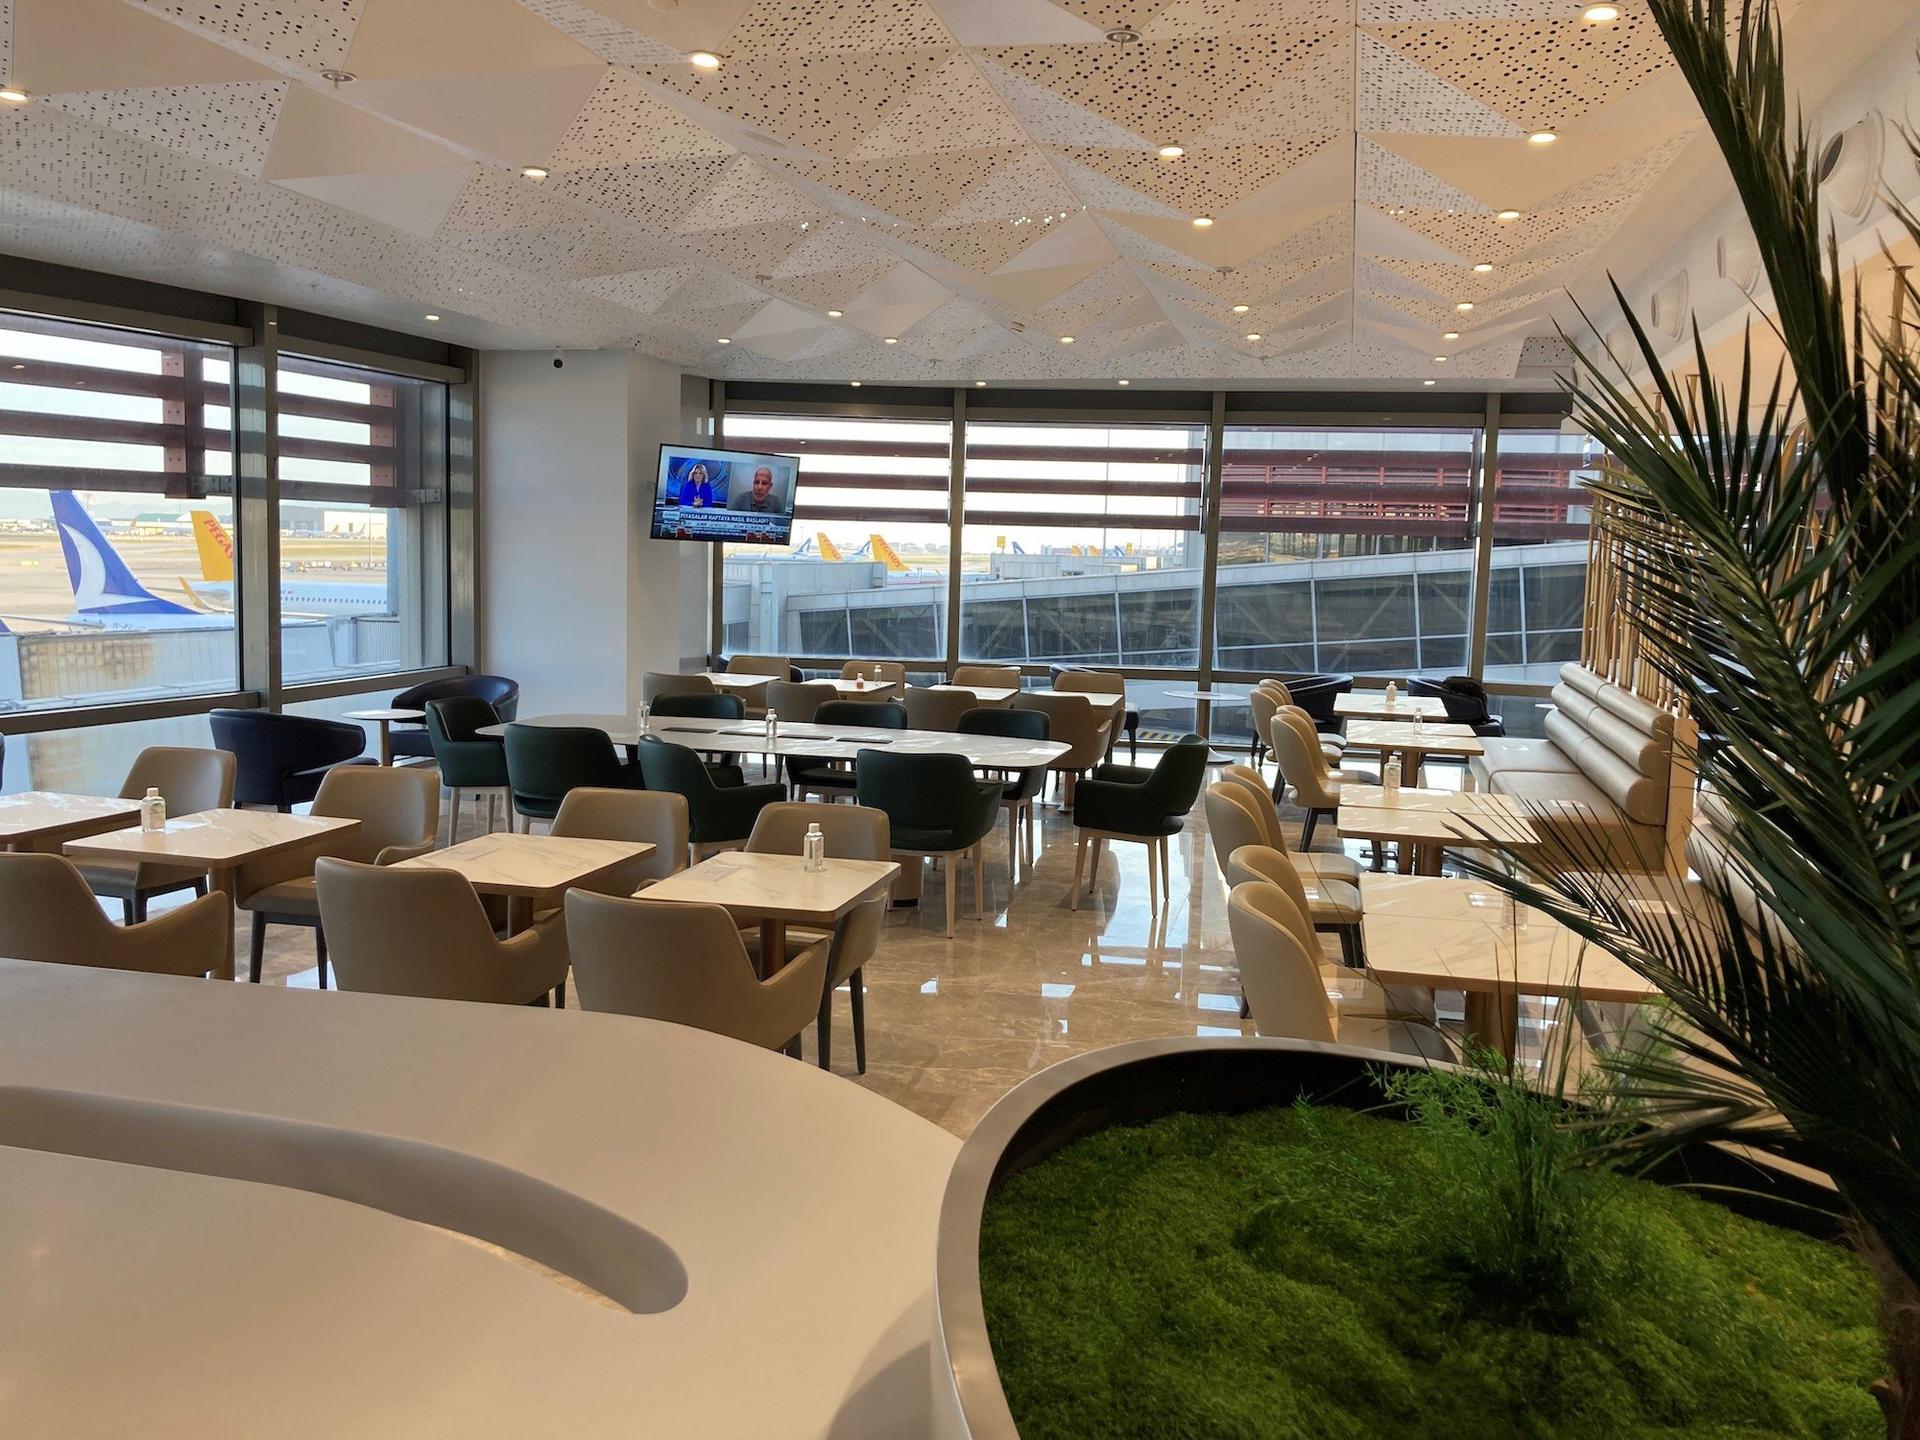 Plaza Premium Lounge (Bosphorus) image 3 of 7